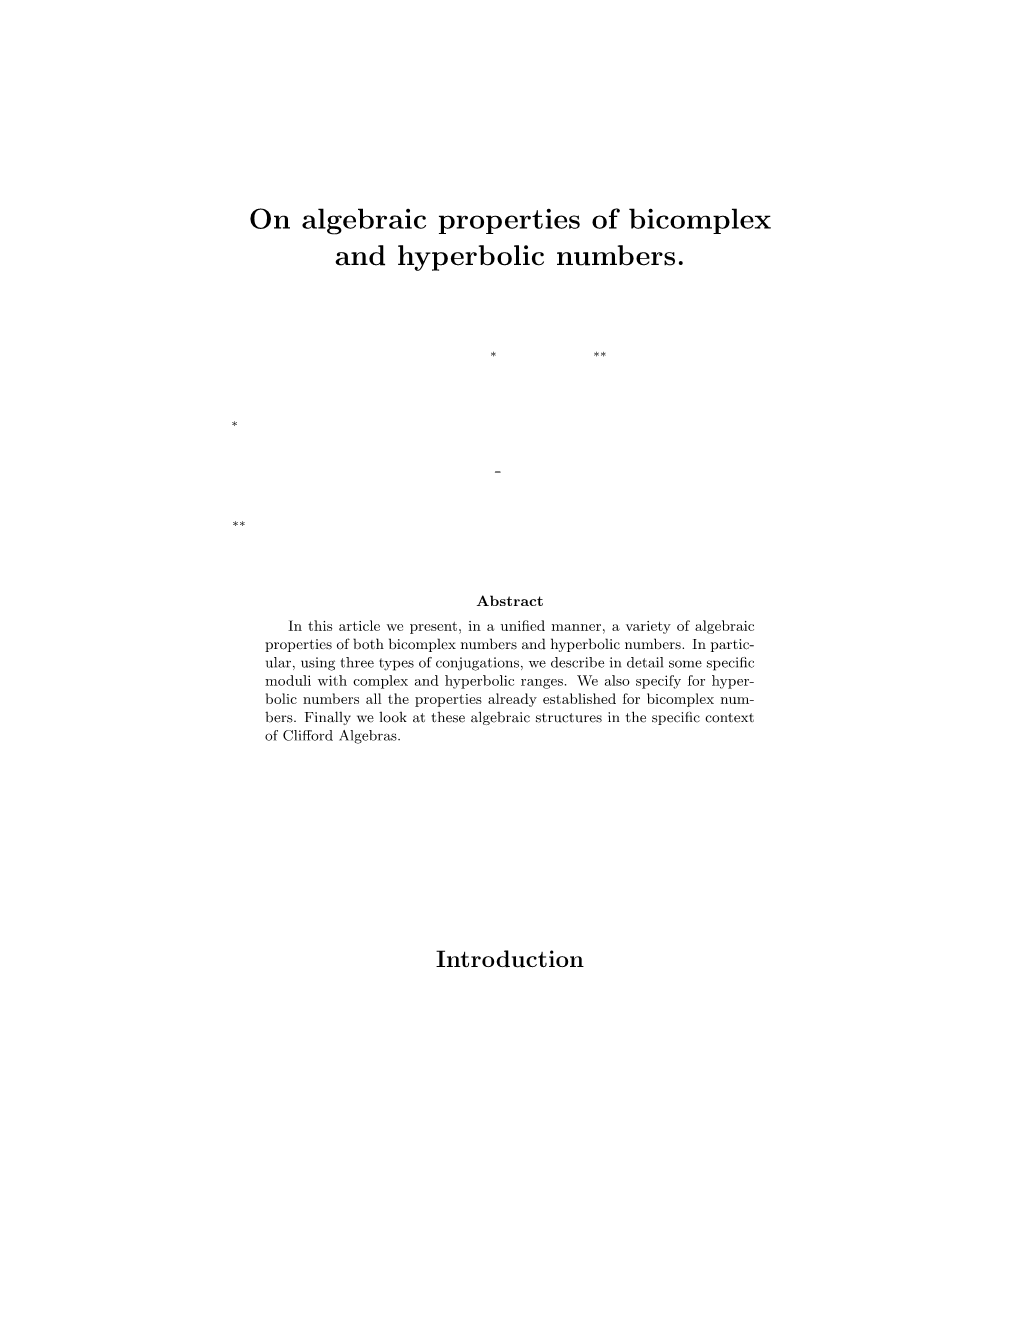 On Algebraic Properties of Bicomplex and Hyperbolic Numbers